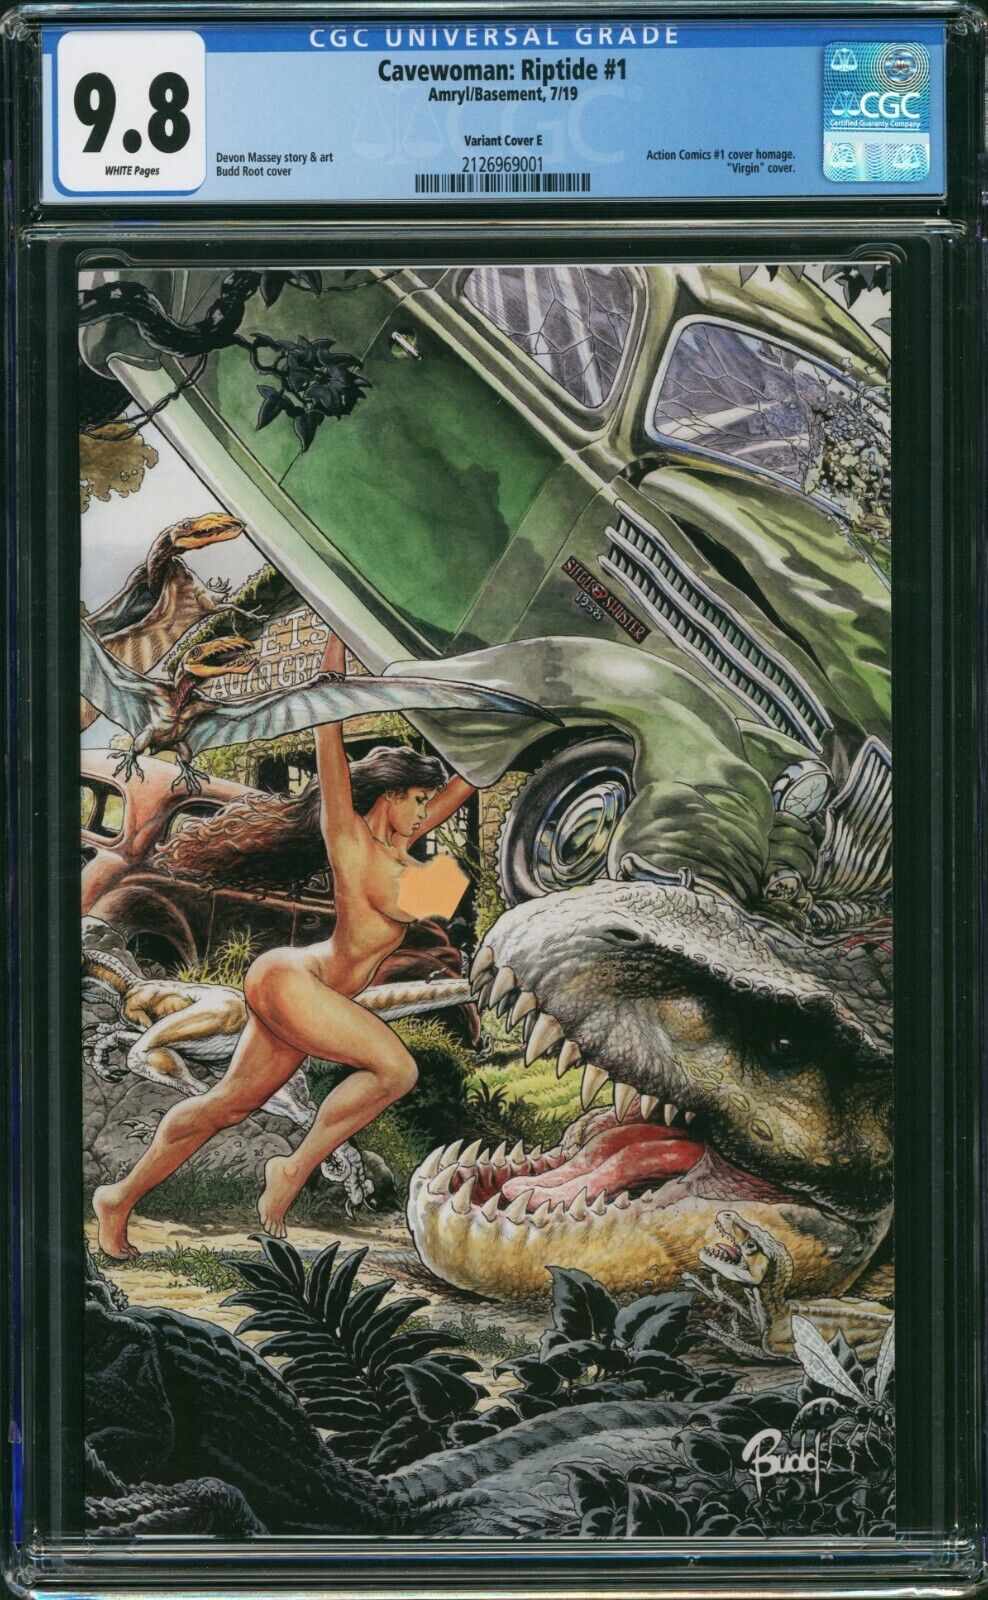 Cavewoman: Riptide #1 Variant Cover E CGC 9.8 - Action Comics #1 homage (ADULT)